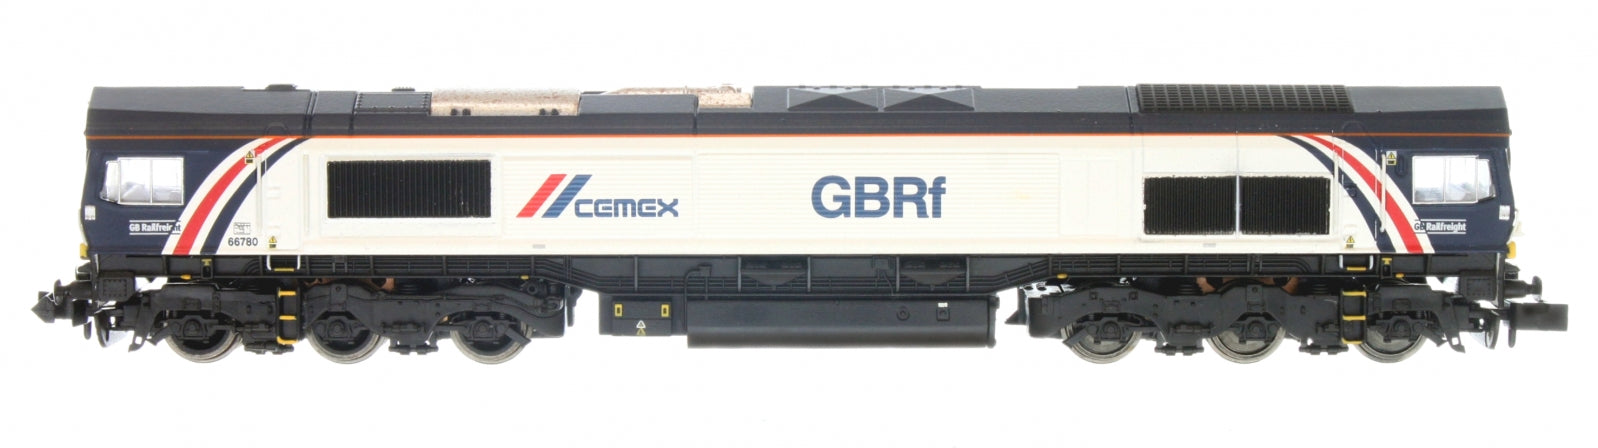 2D-007-014D N Gauge Class 66 66780 GBRF Cemex DCC Fitted